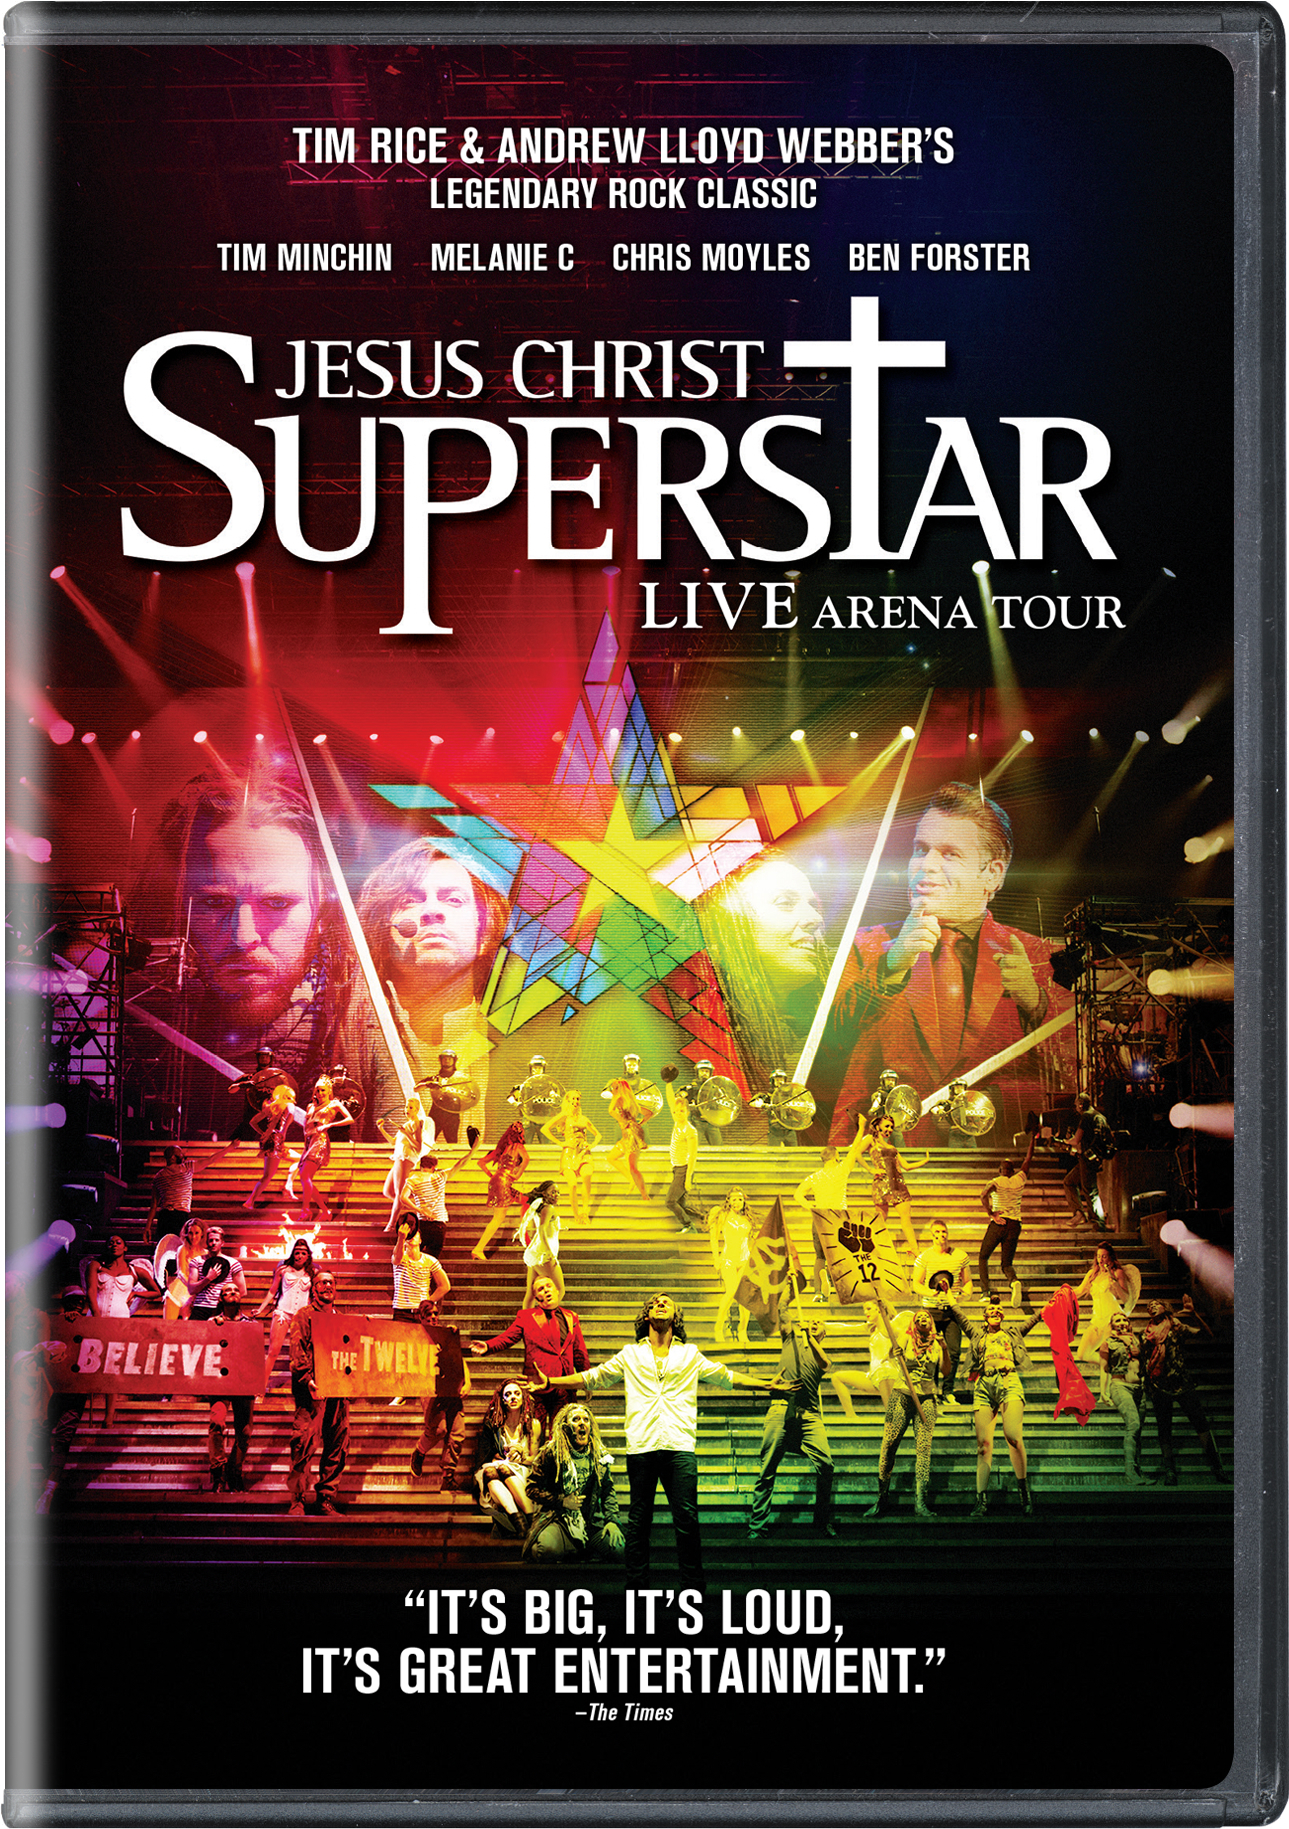 Jesus Christ Superstar - Live Arena Tour 2012 - DVD [ 2012 ]  - Stage Musicals Music On DVD